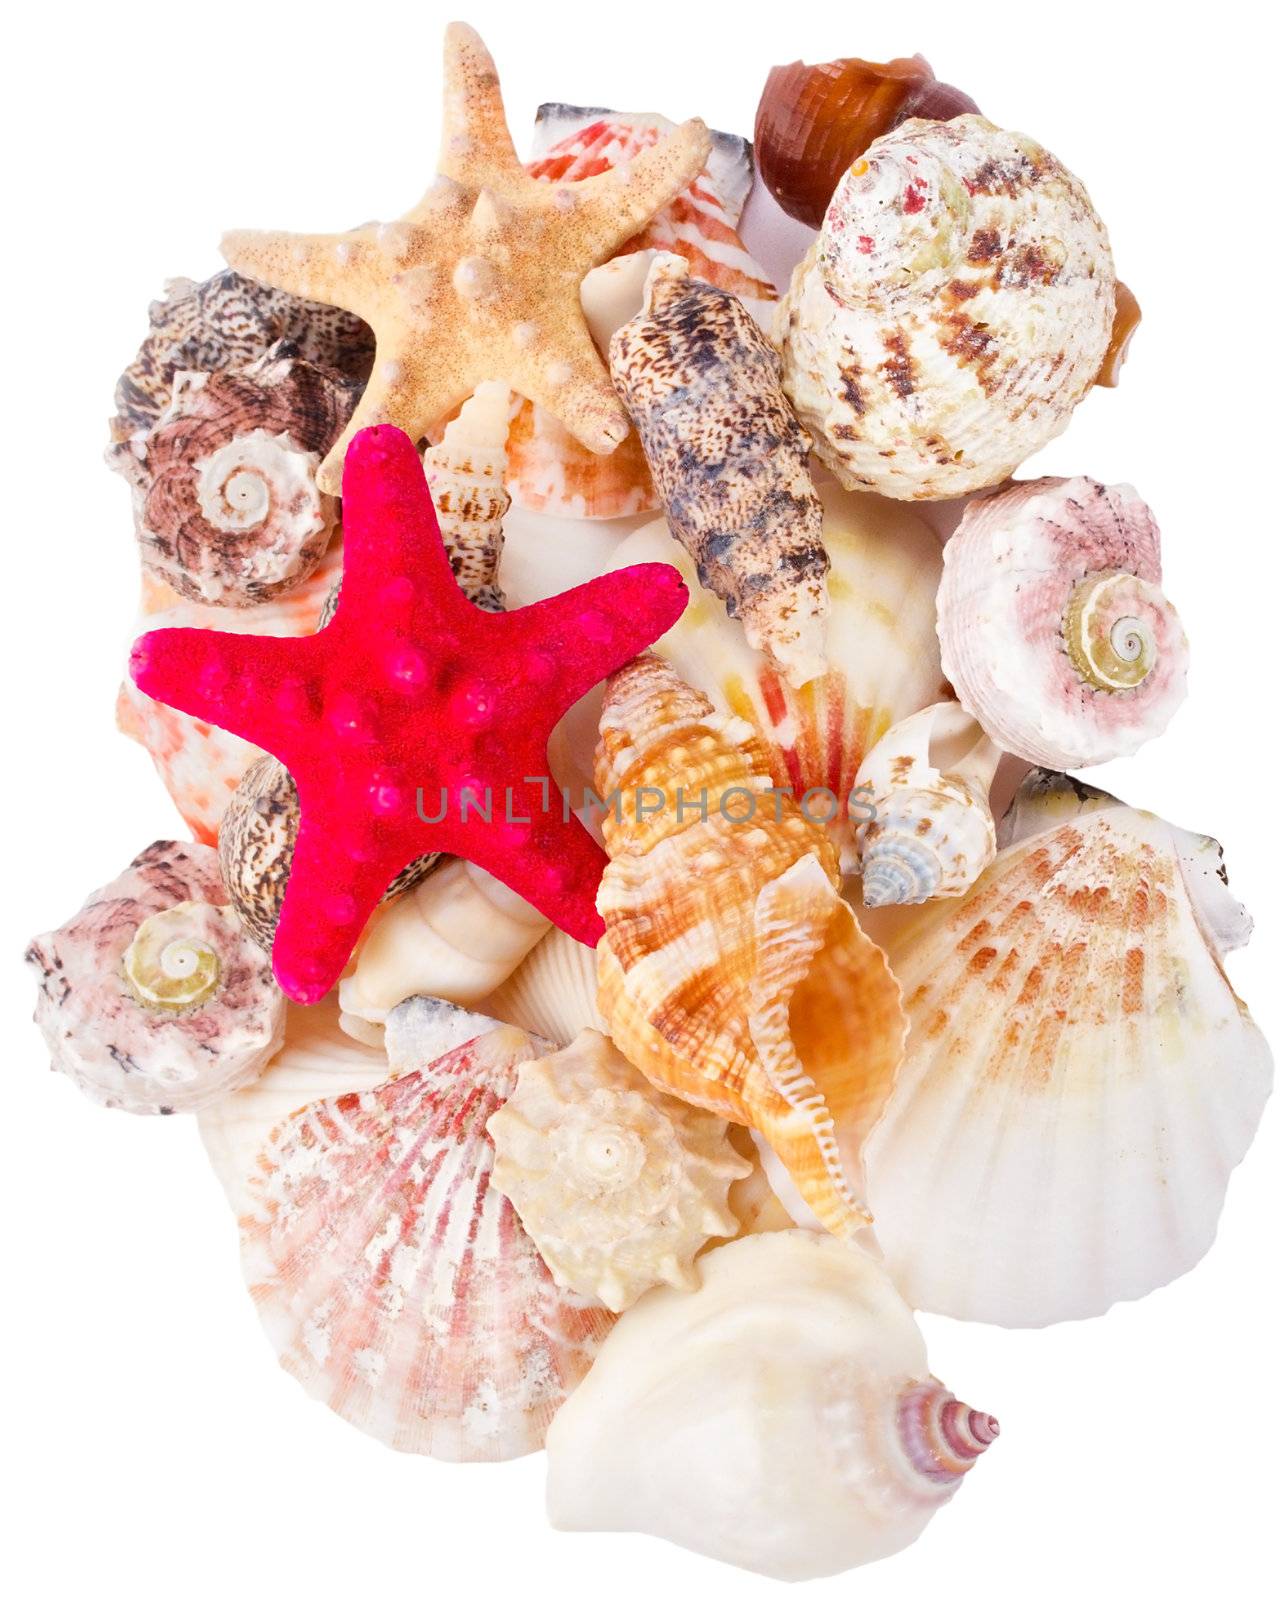 seashells background by Alekcey